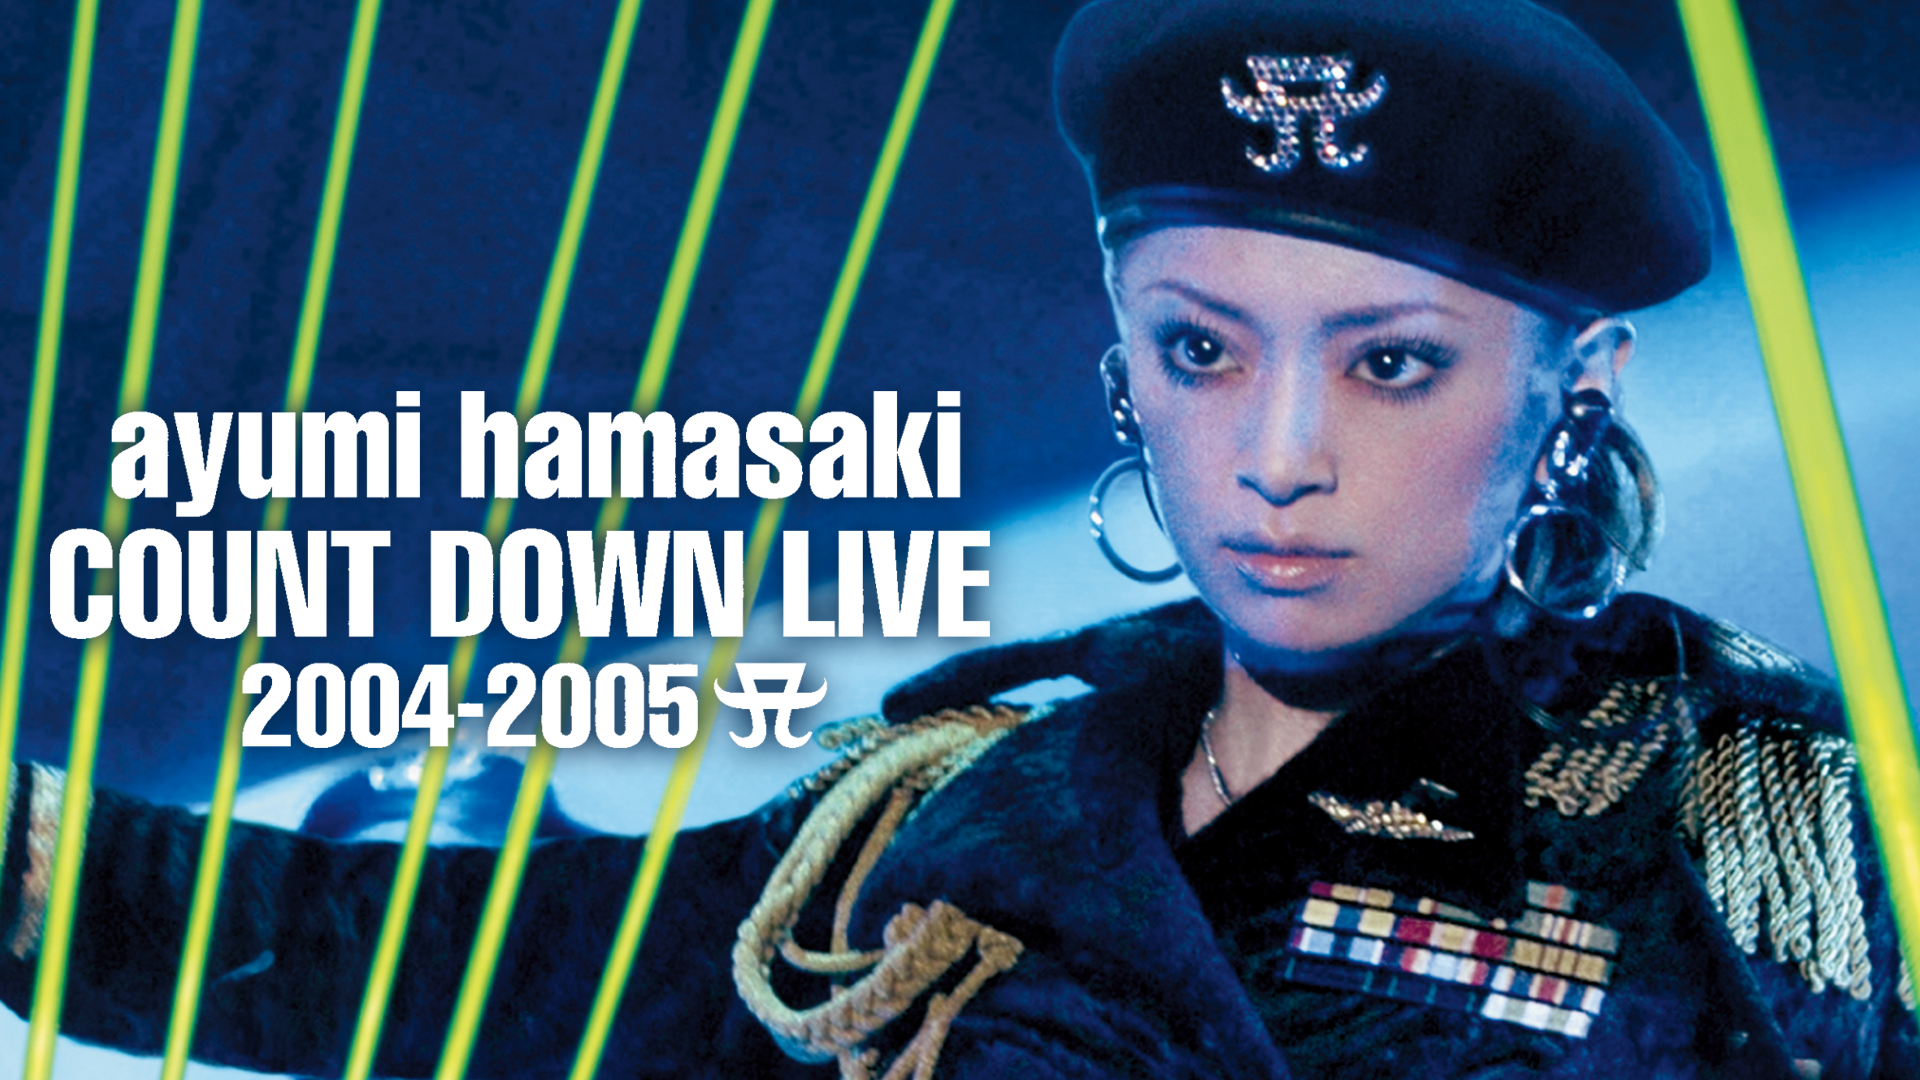 ayumi hamasaki COUNTDOWN LIVE 2004-2005 A(音楽・アイドル / 2005) - 動画配信 | U-NEXT  31日間無料トライアル